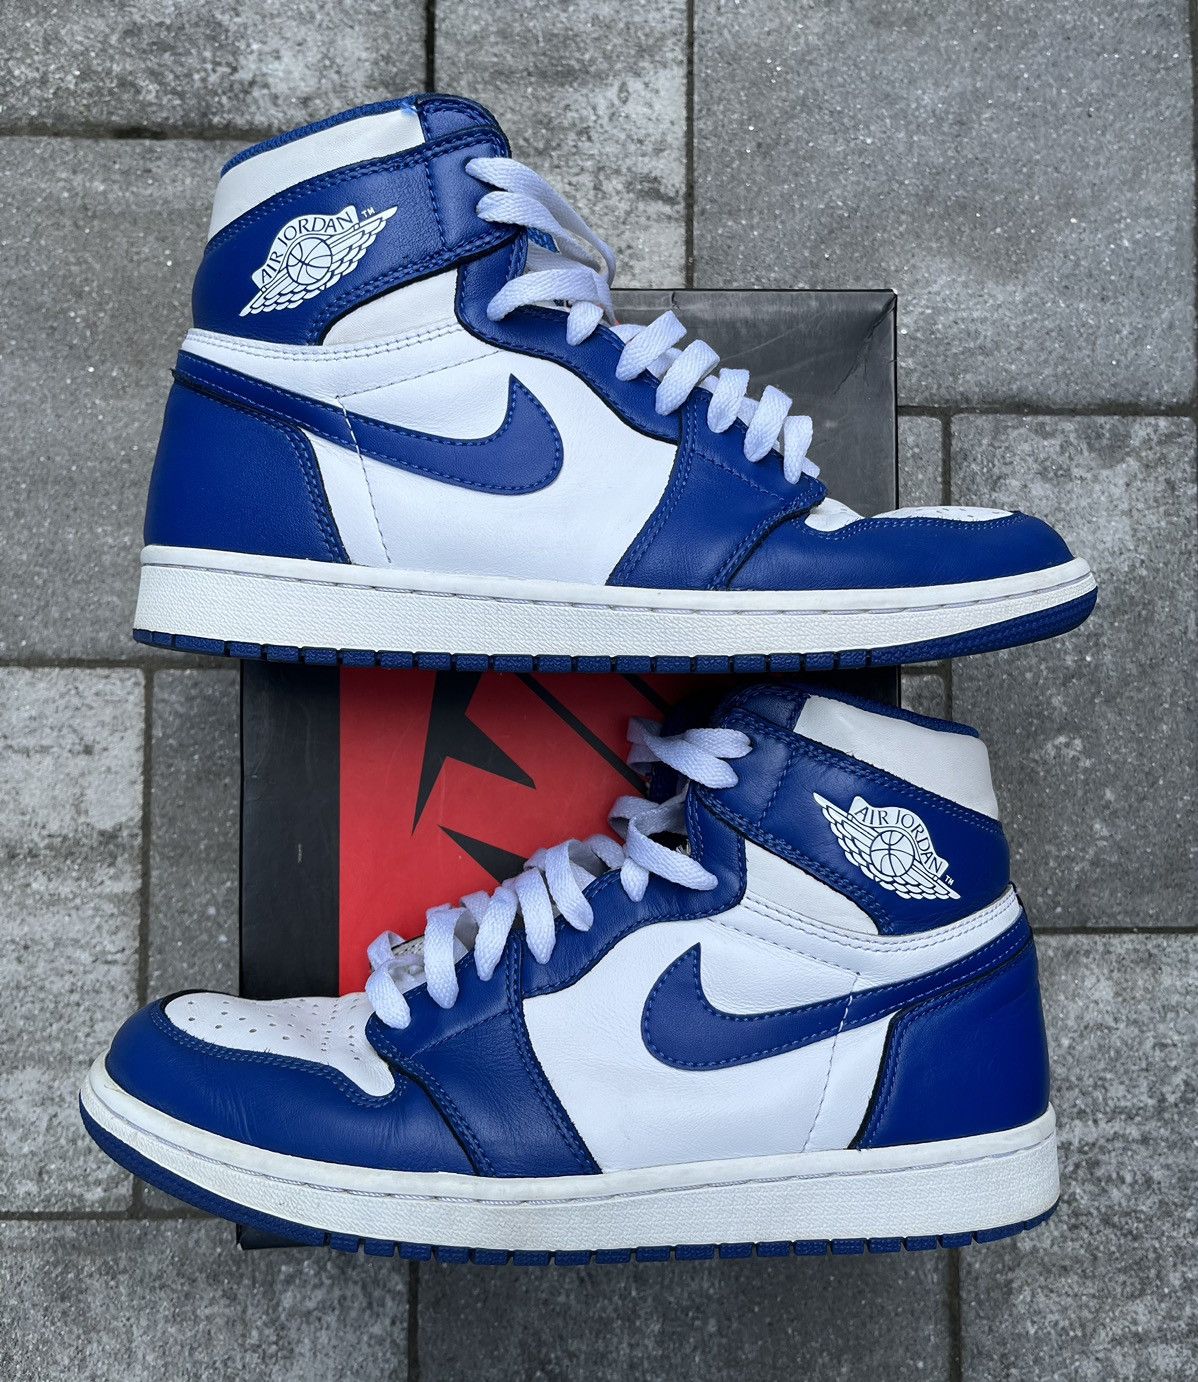 Pre-owned Jordan Brand Nike Air Jordan 1 Retro Og High Storm Blue Size 9.5 Shoes